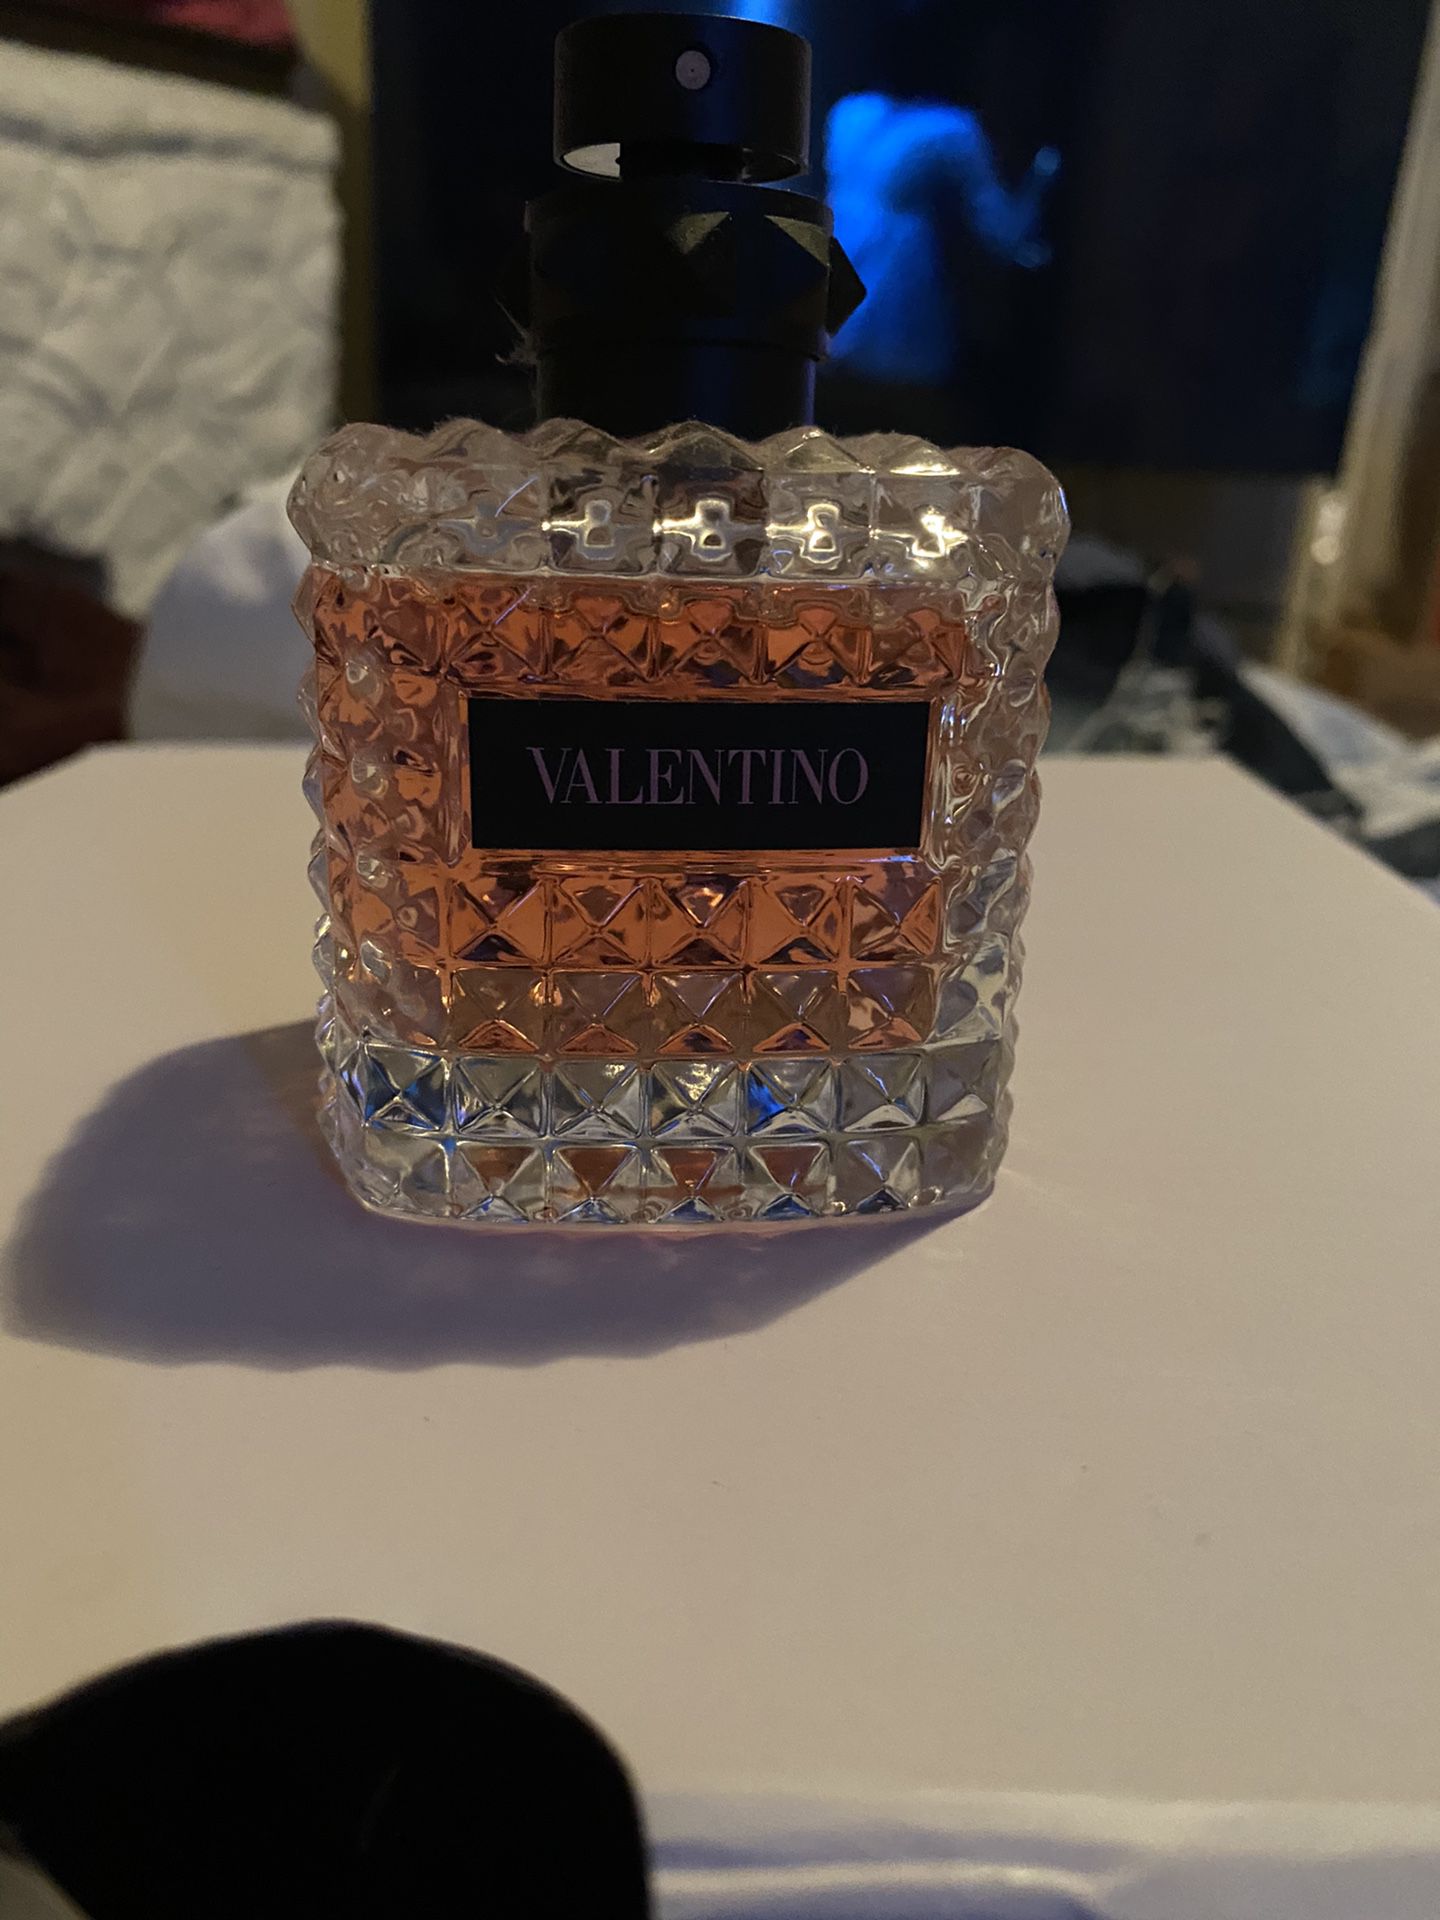 Valentino perfume